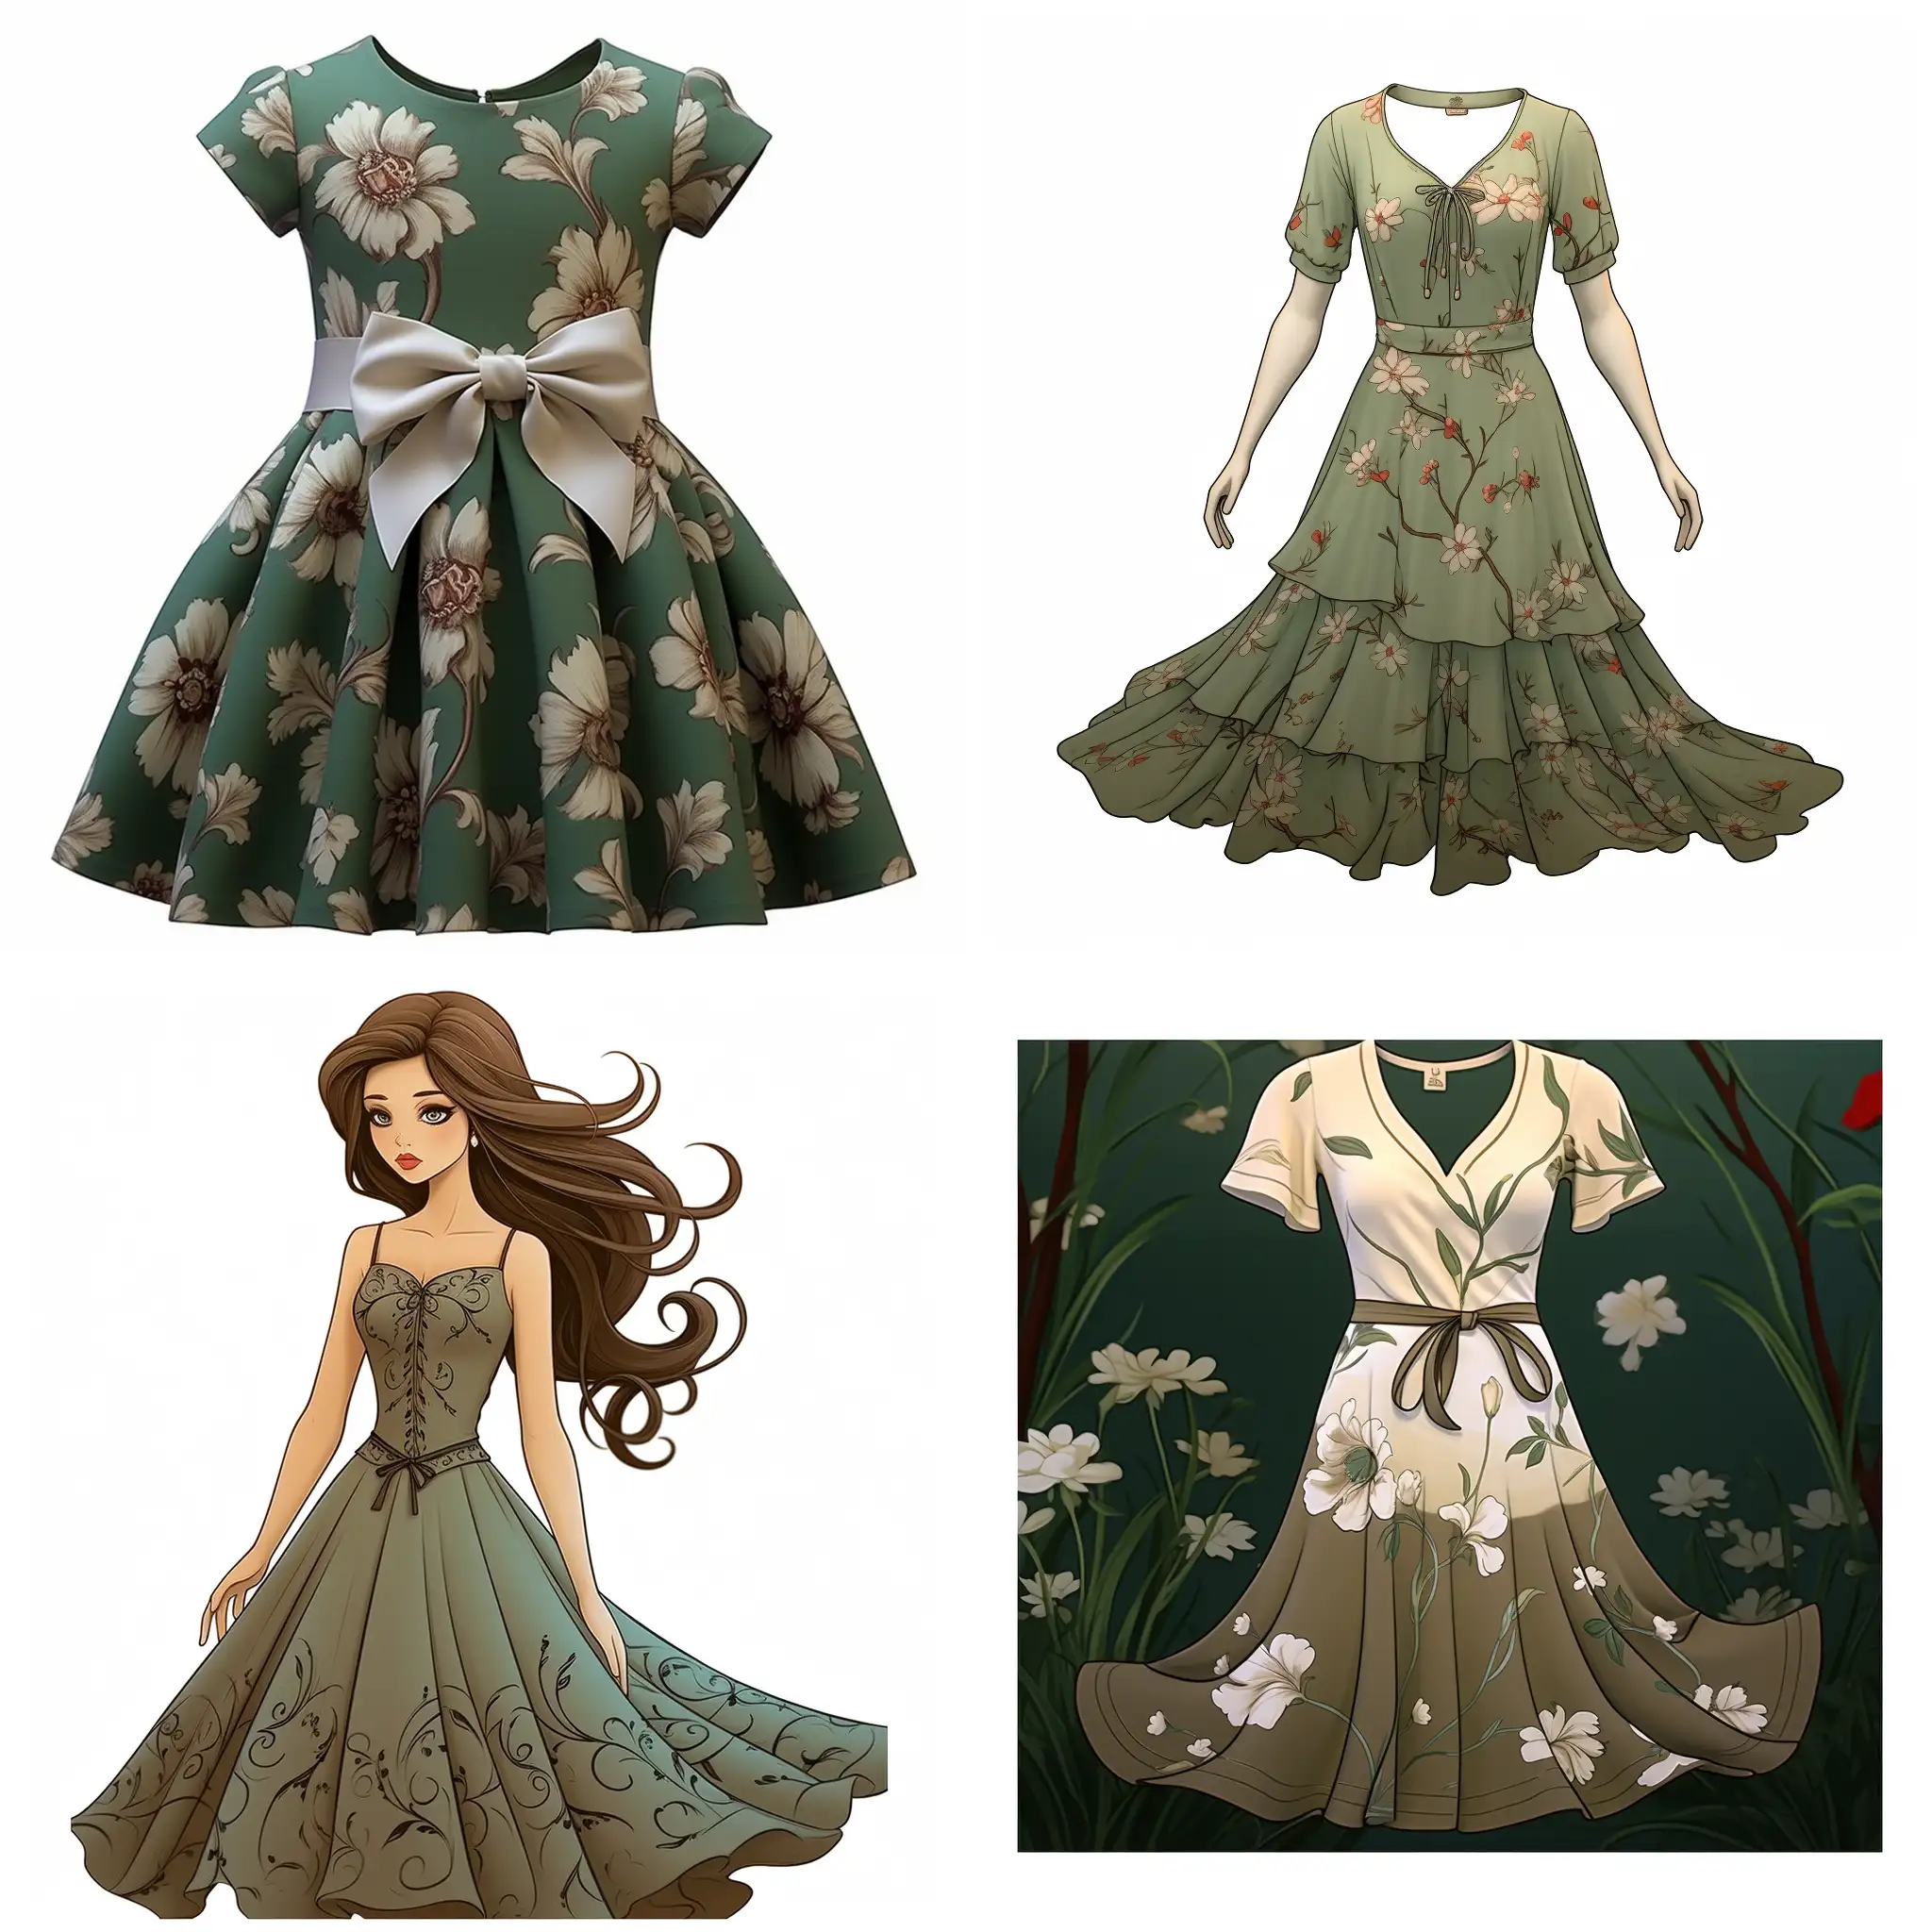 Elegant-Summer-Fashion-Green-Dress-with-Patterns-Reference-Sheet